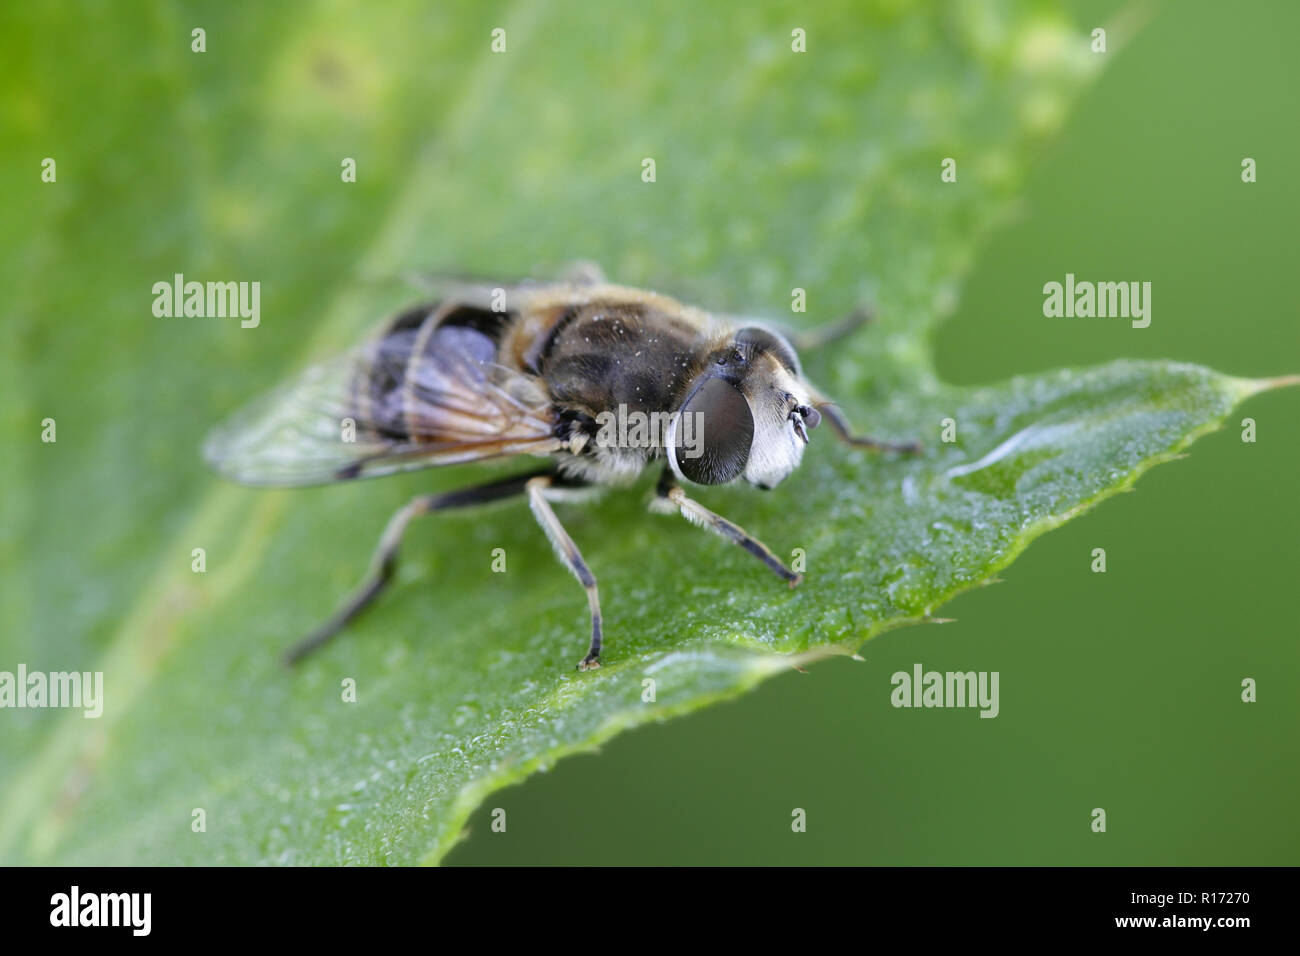 Plain-faced dronefly, Eristalis arbustorum, an important pollinator Stock Photo